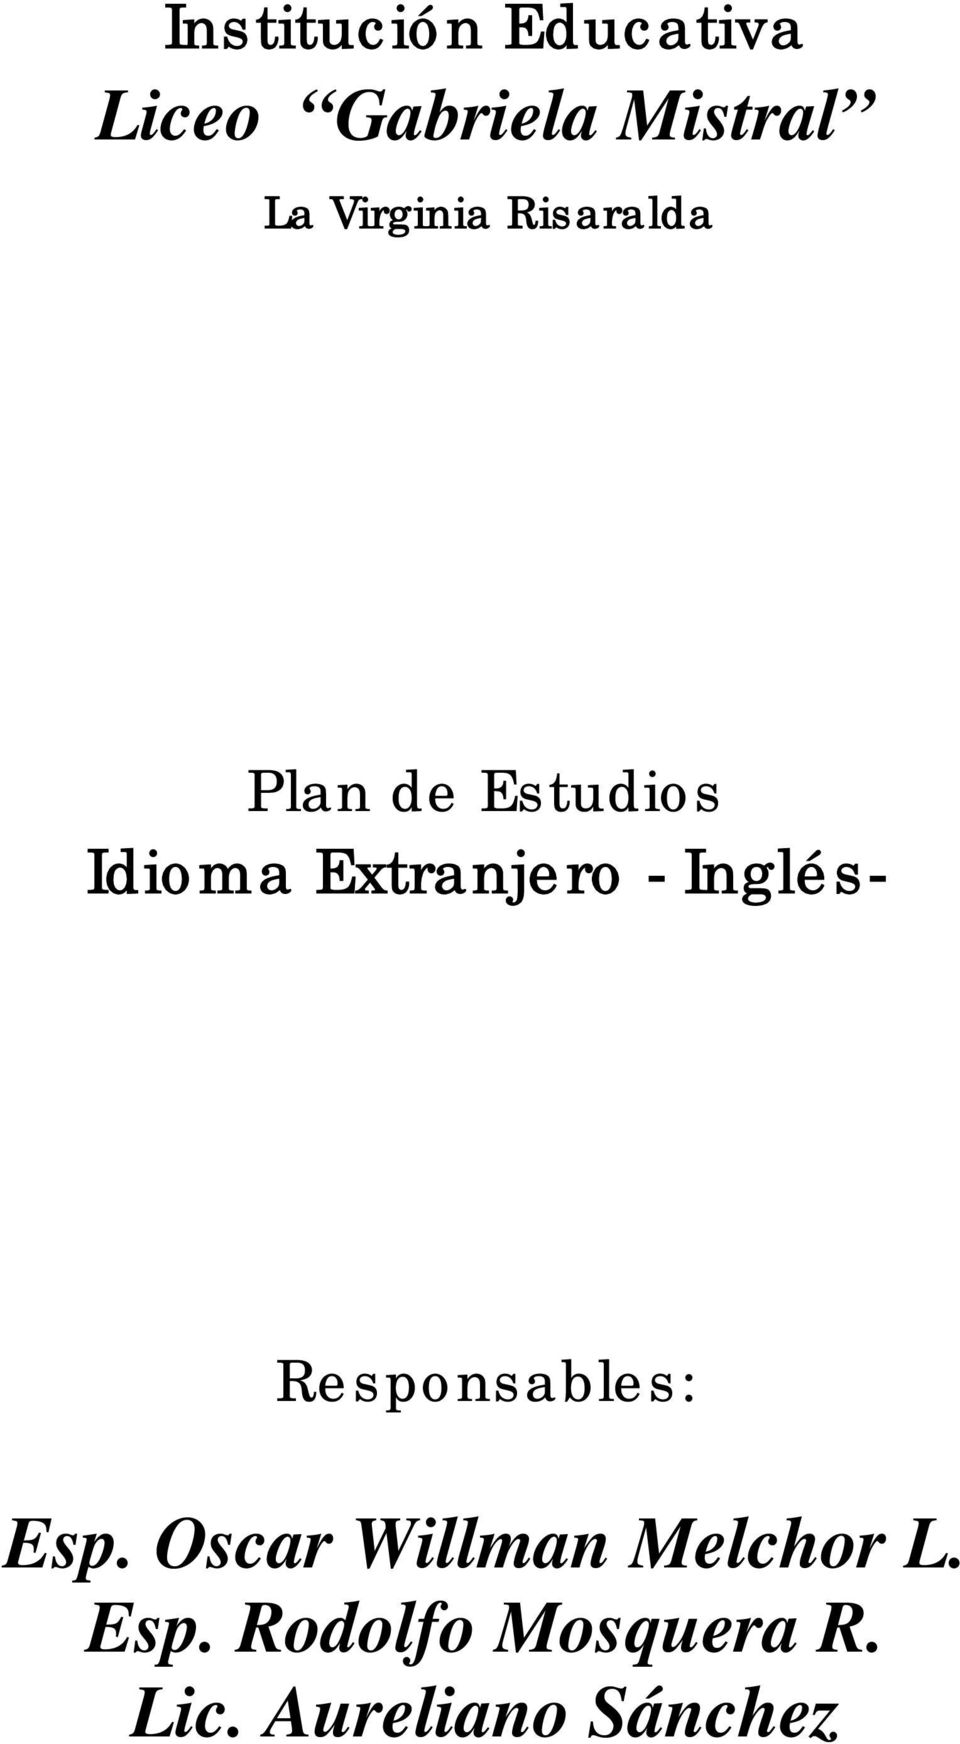 Extranjero - Inglés- Responsables: Esp.